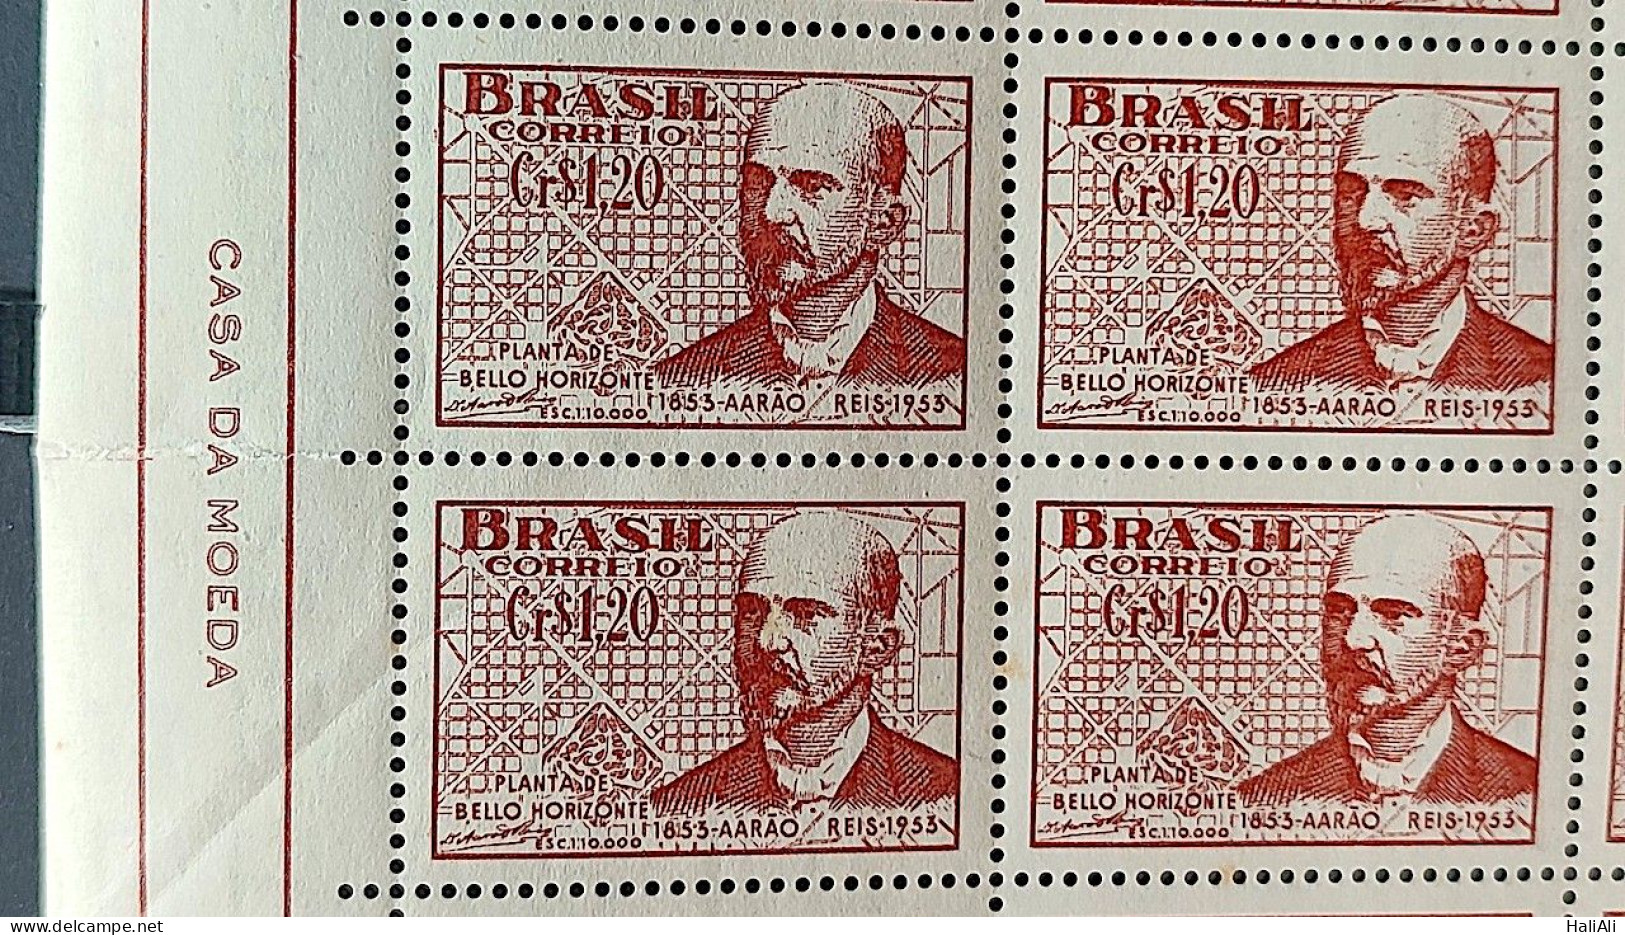 C 298 Brazil Stamp Engineer Aarao Reis Belo Horizonte Minas Gerais 1953 Block Of 4 Vignette Casa Da Moeda - Unused Stamps